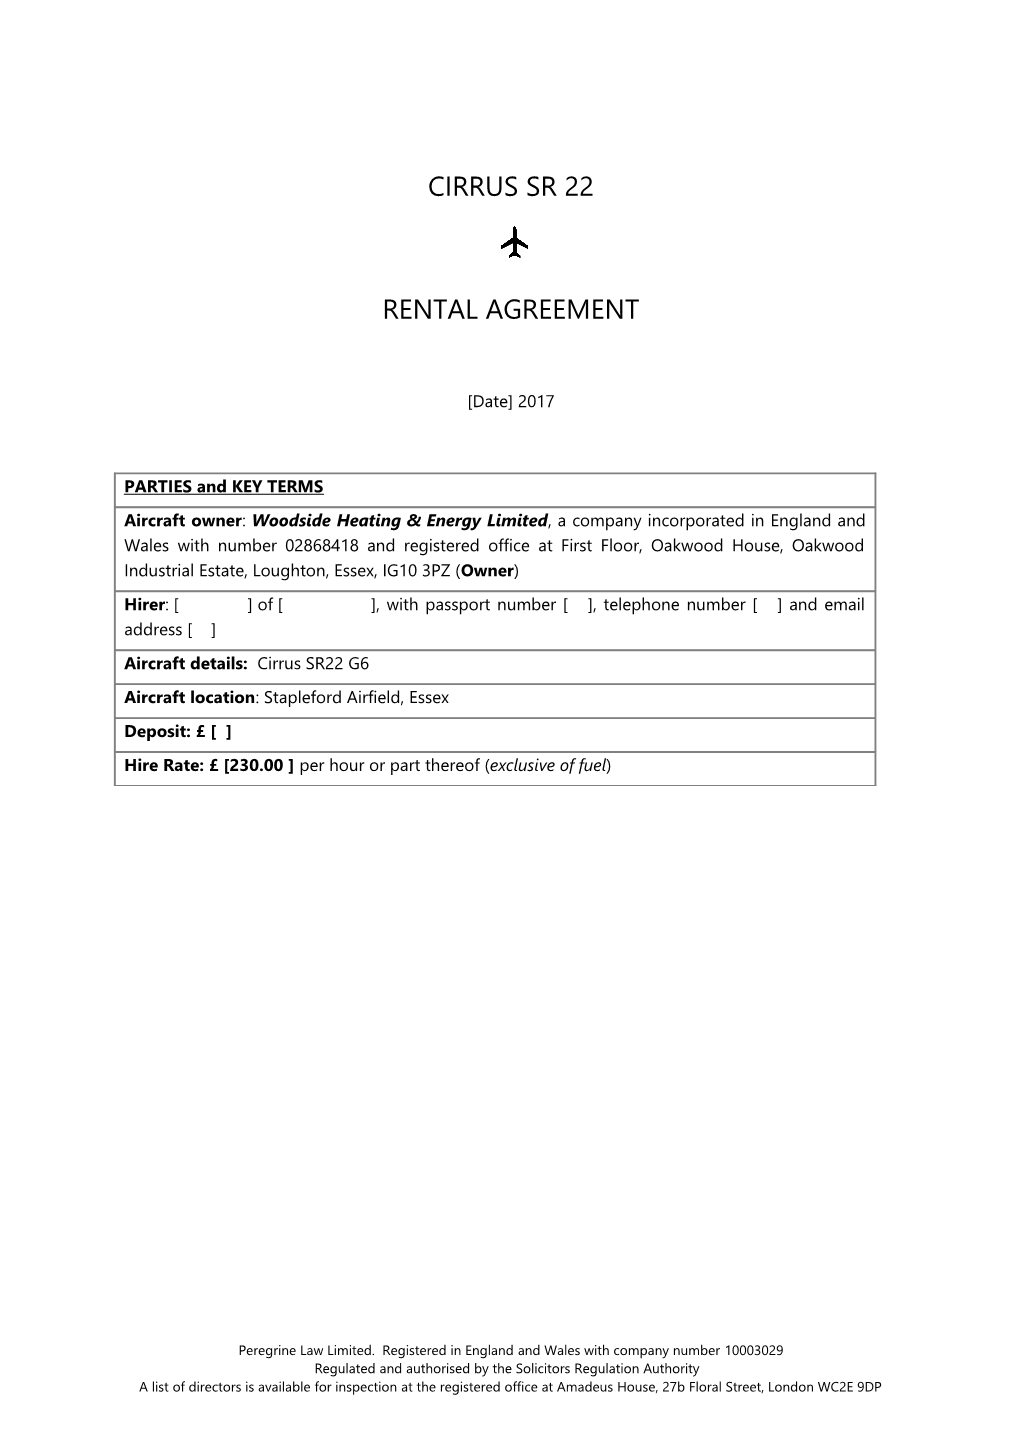 RA Cirrus SR22 Rental Agreement